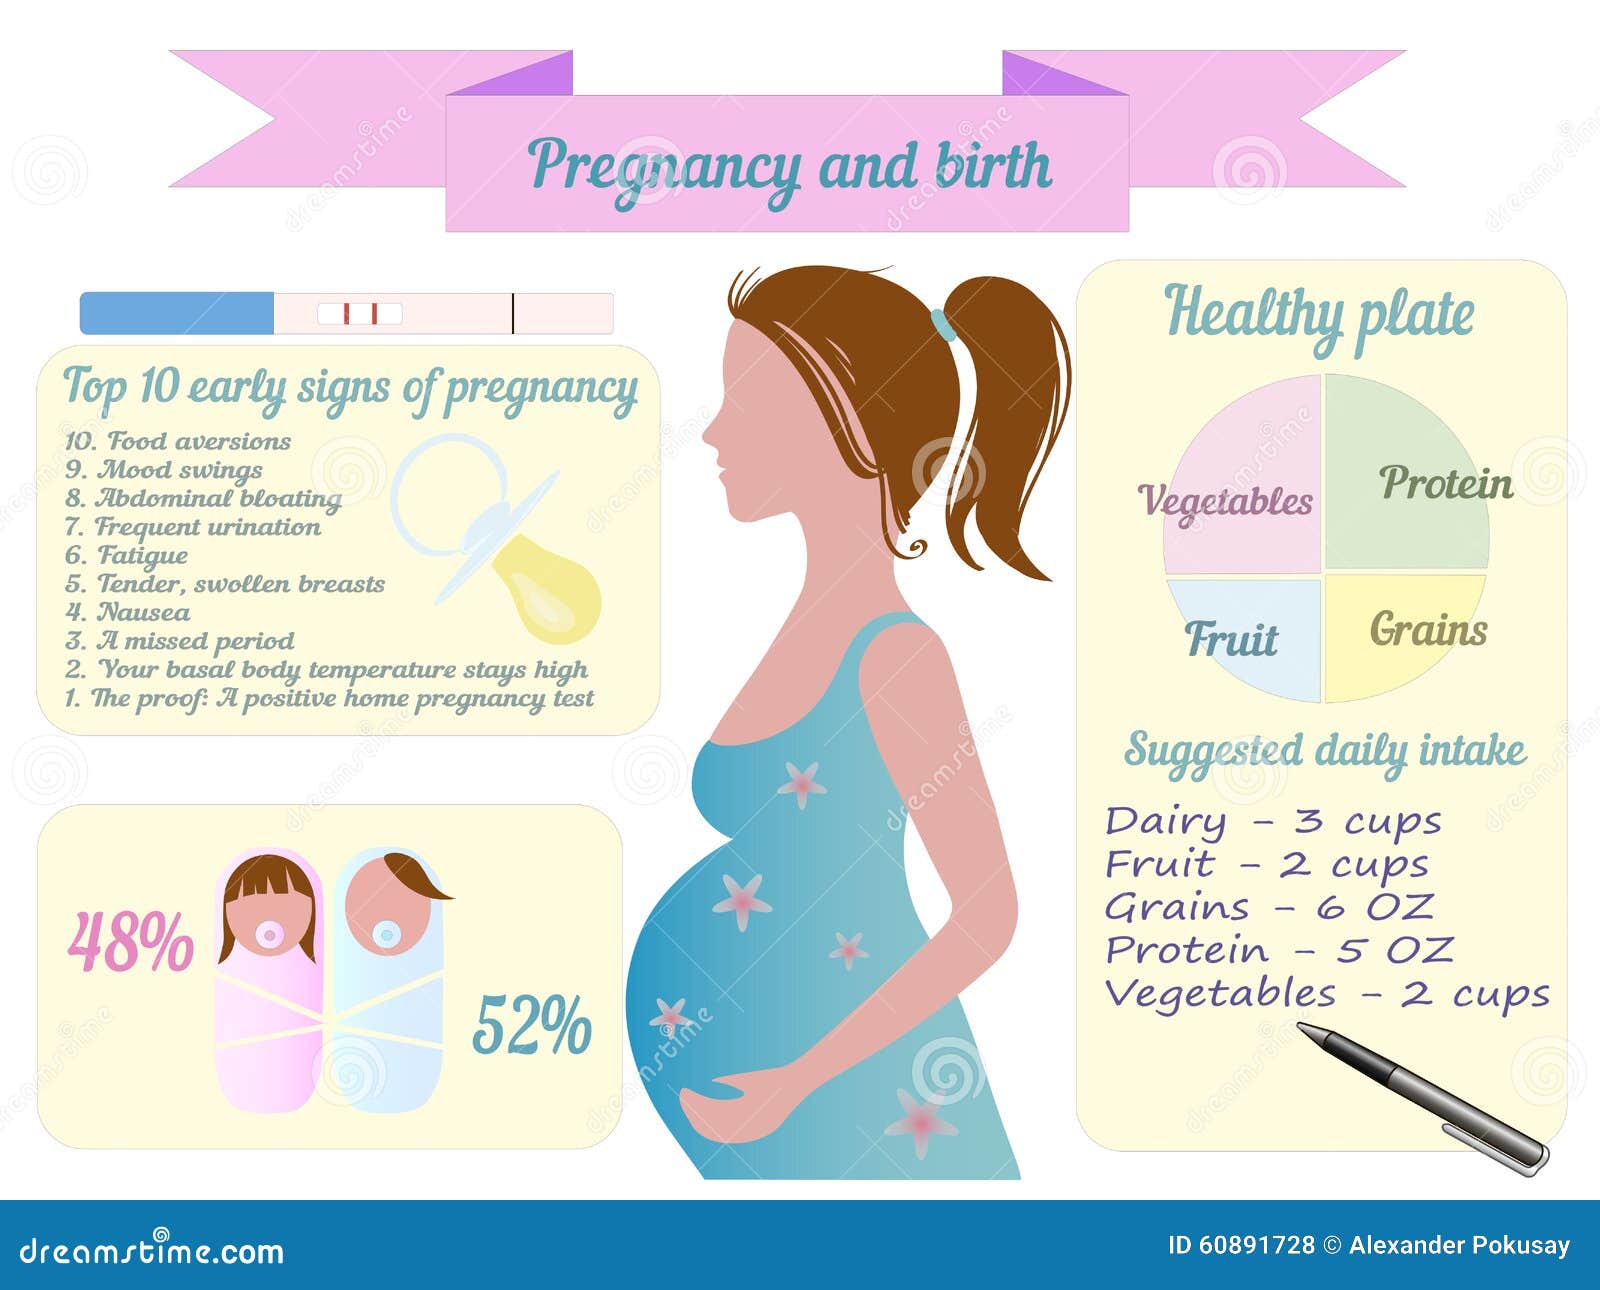 pregnancy trimester infographic 